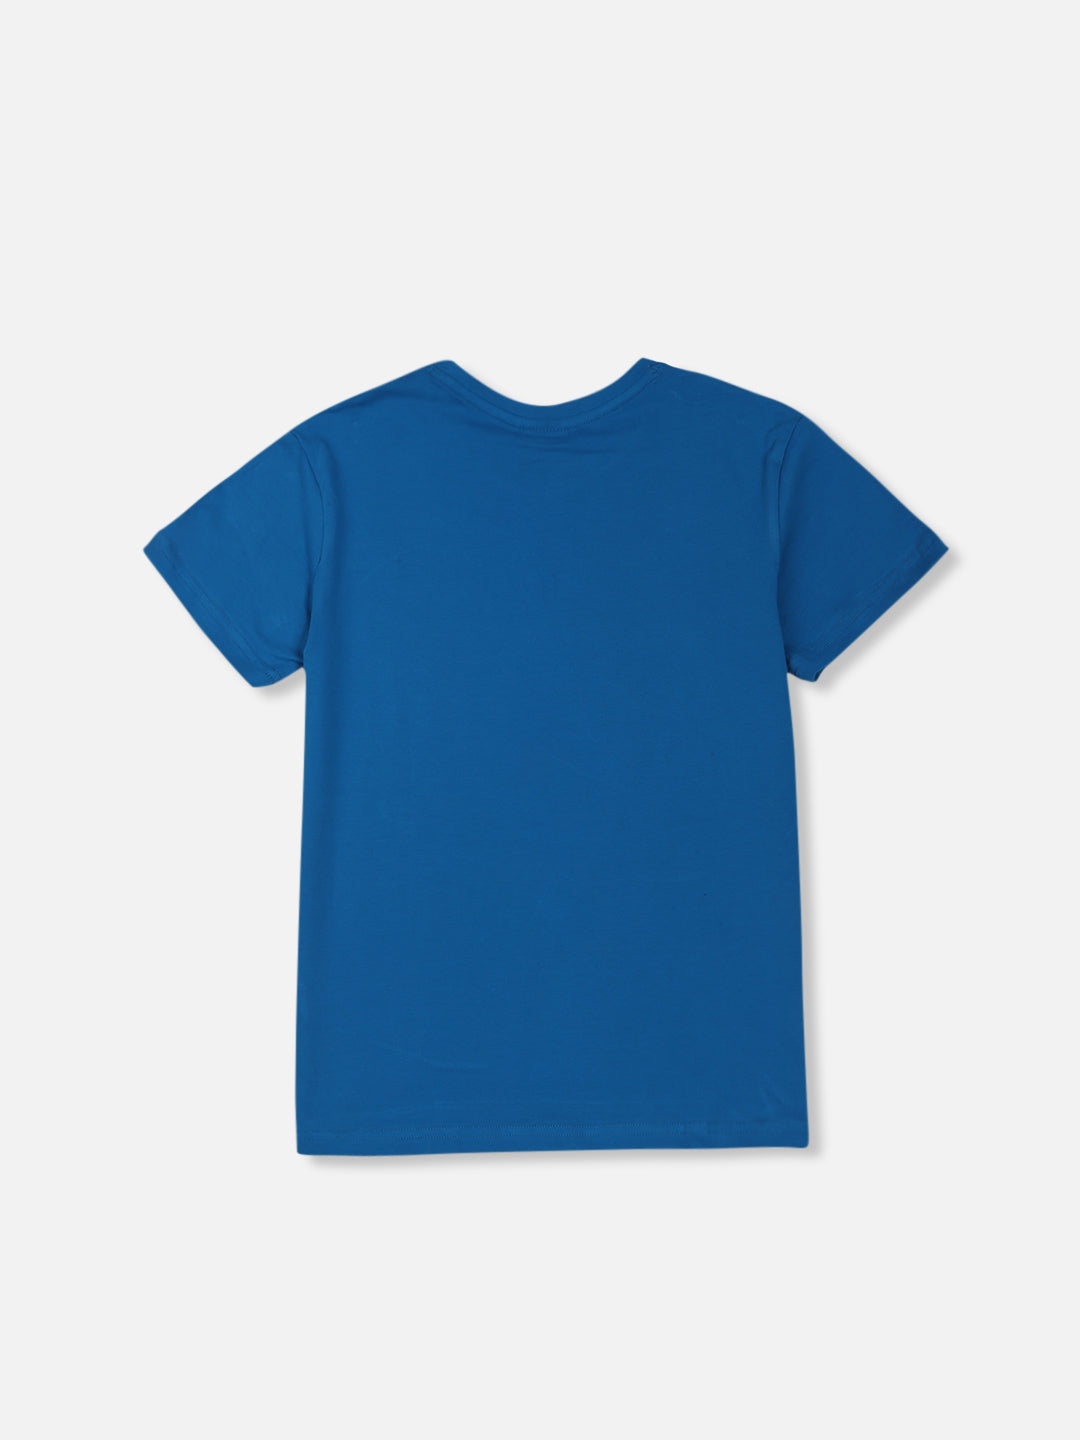 Boys Blue Printed Cotton T-Shirt